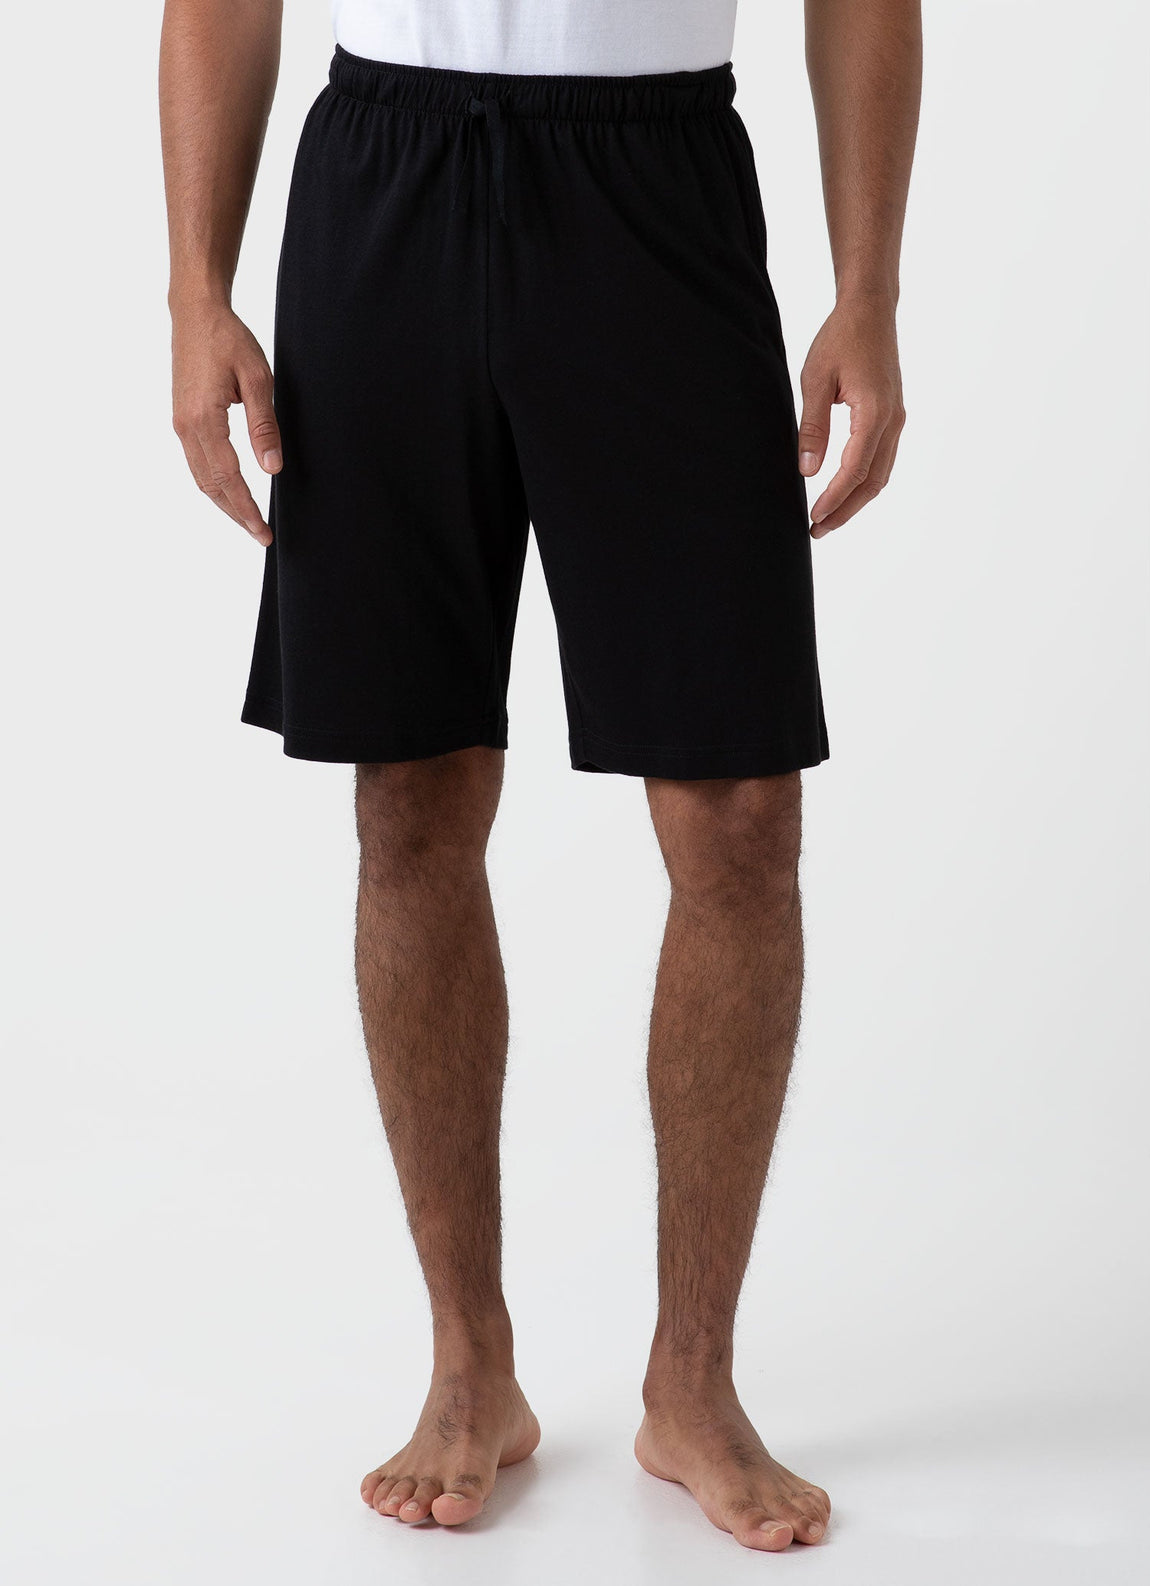 Men's Cotton Modal Lounge Shorts in Black